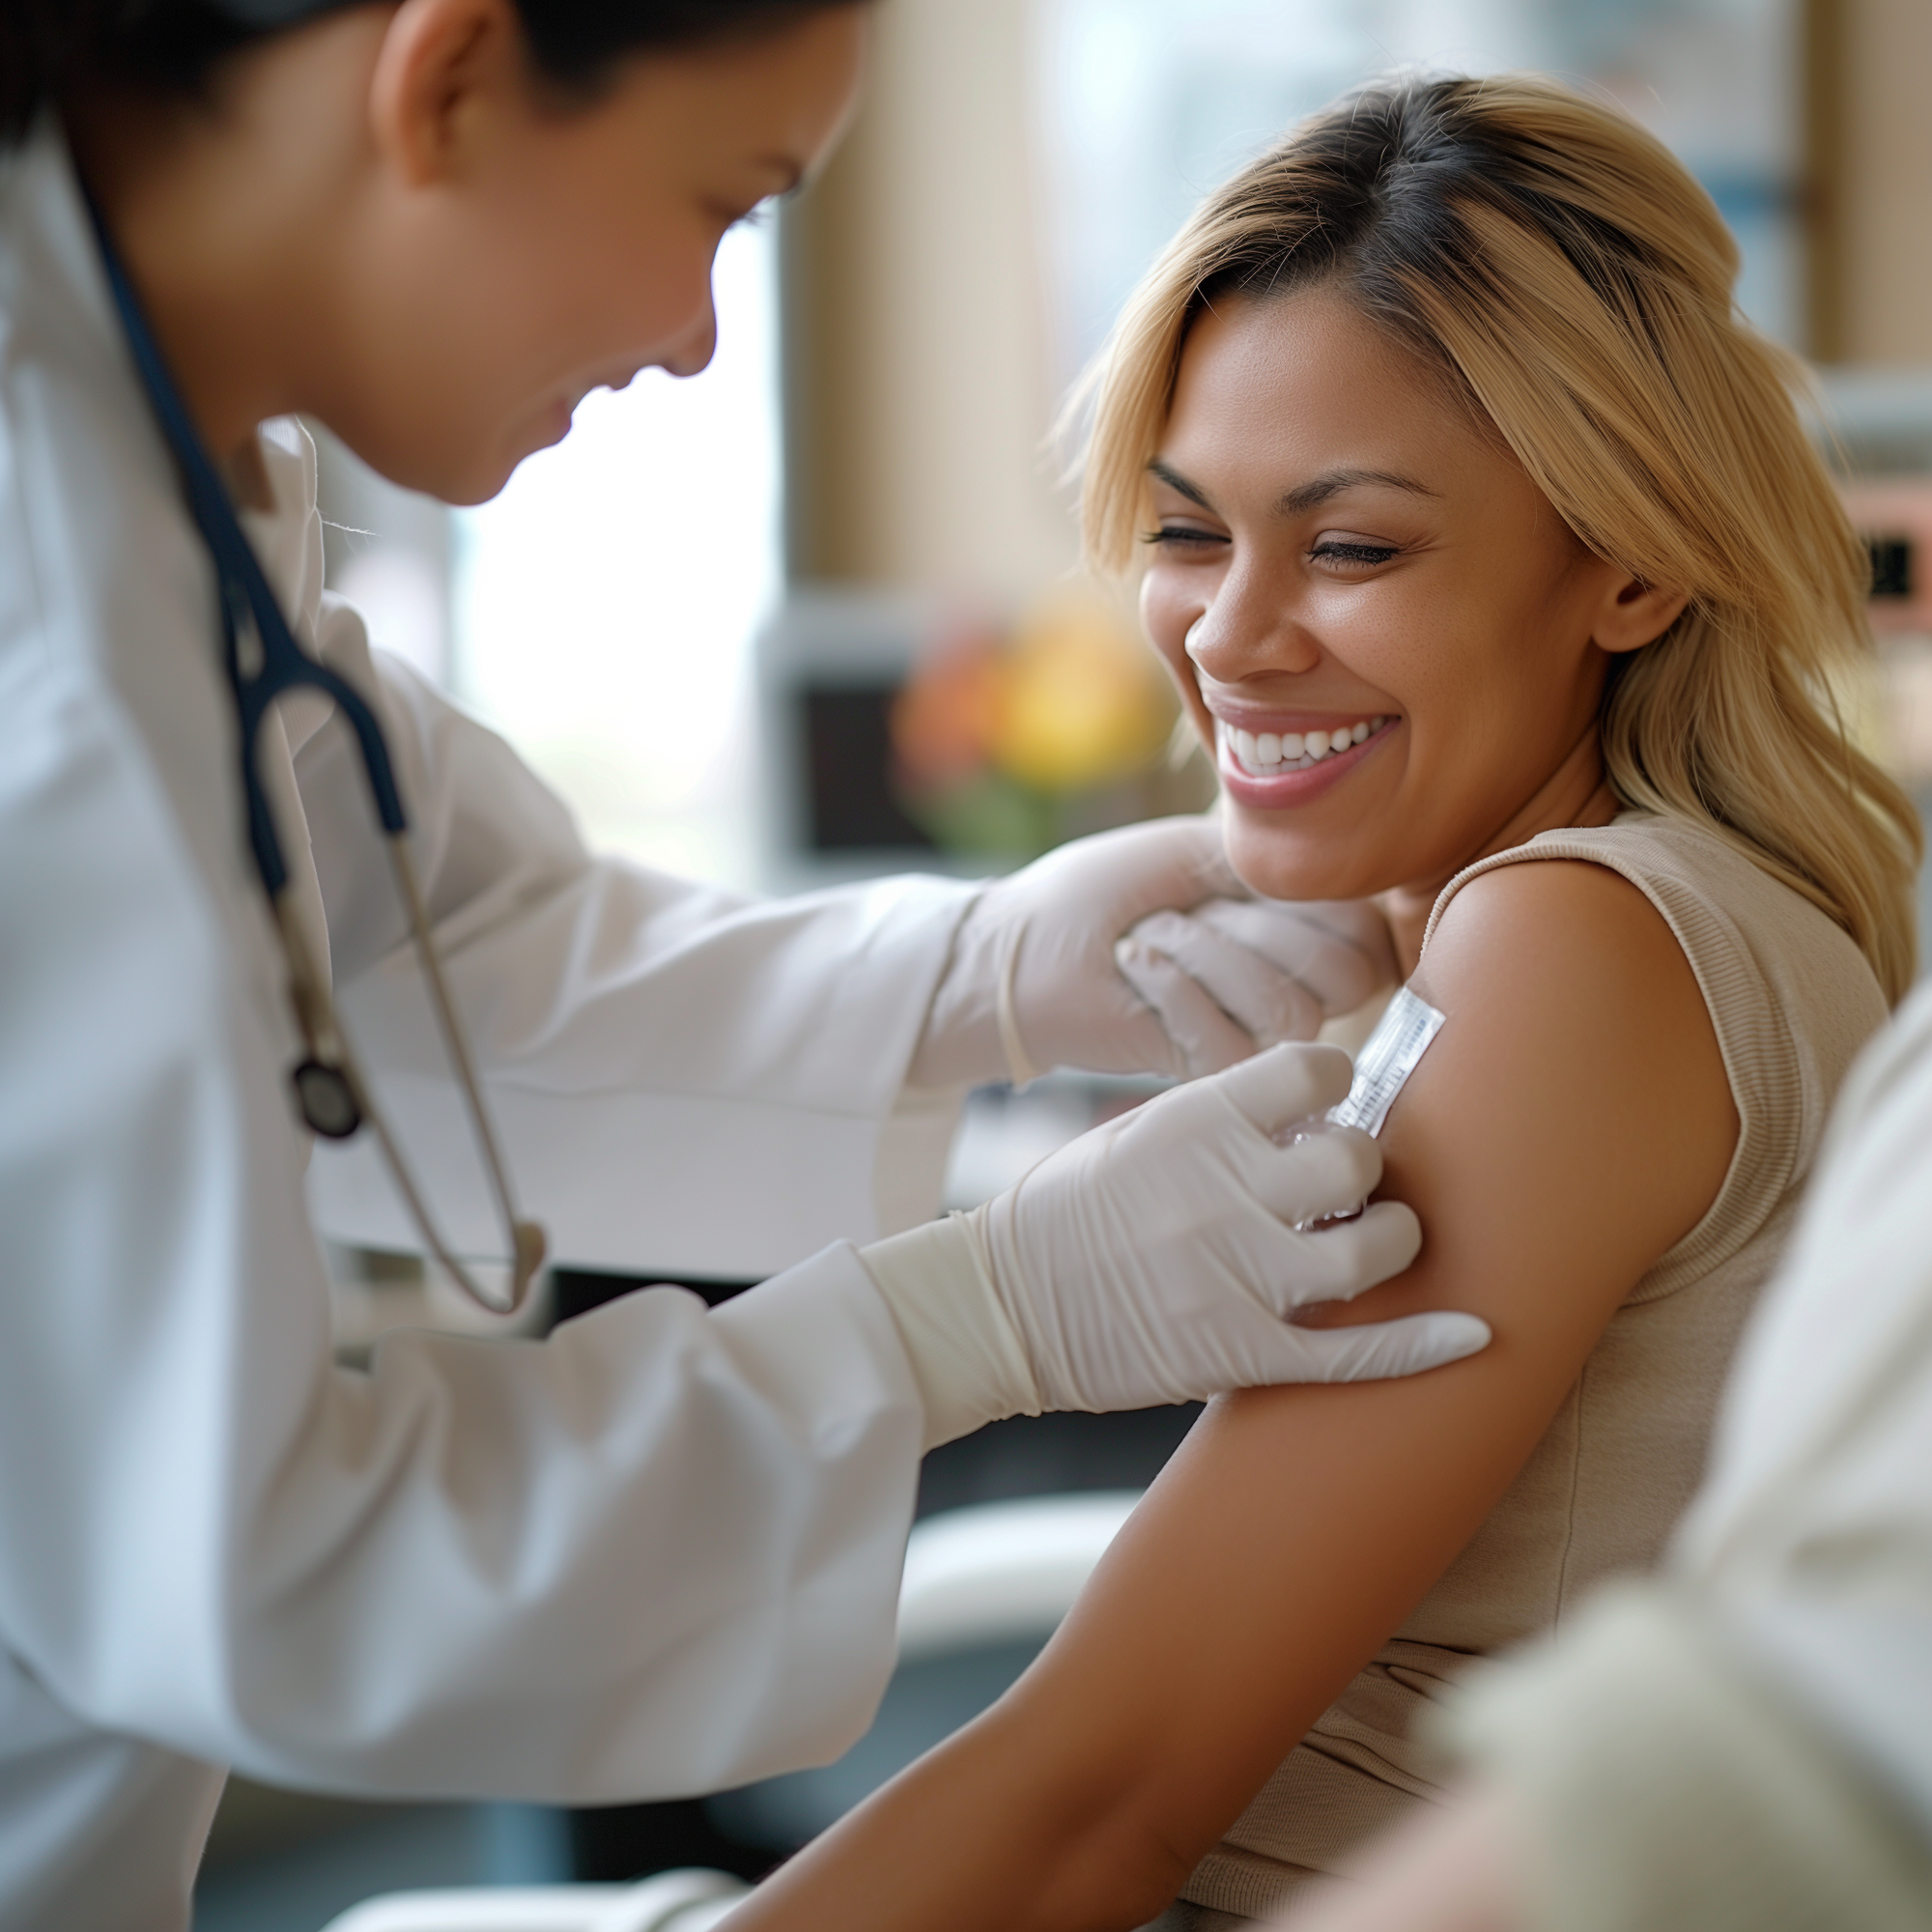 An image of a woman having a blood test for diabetes symptoms.